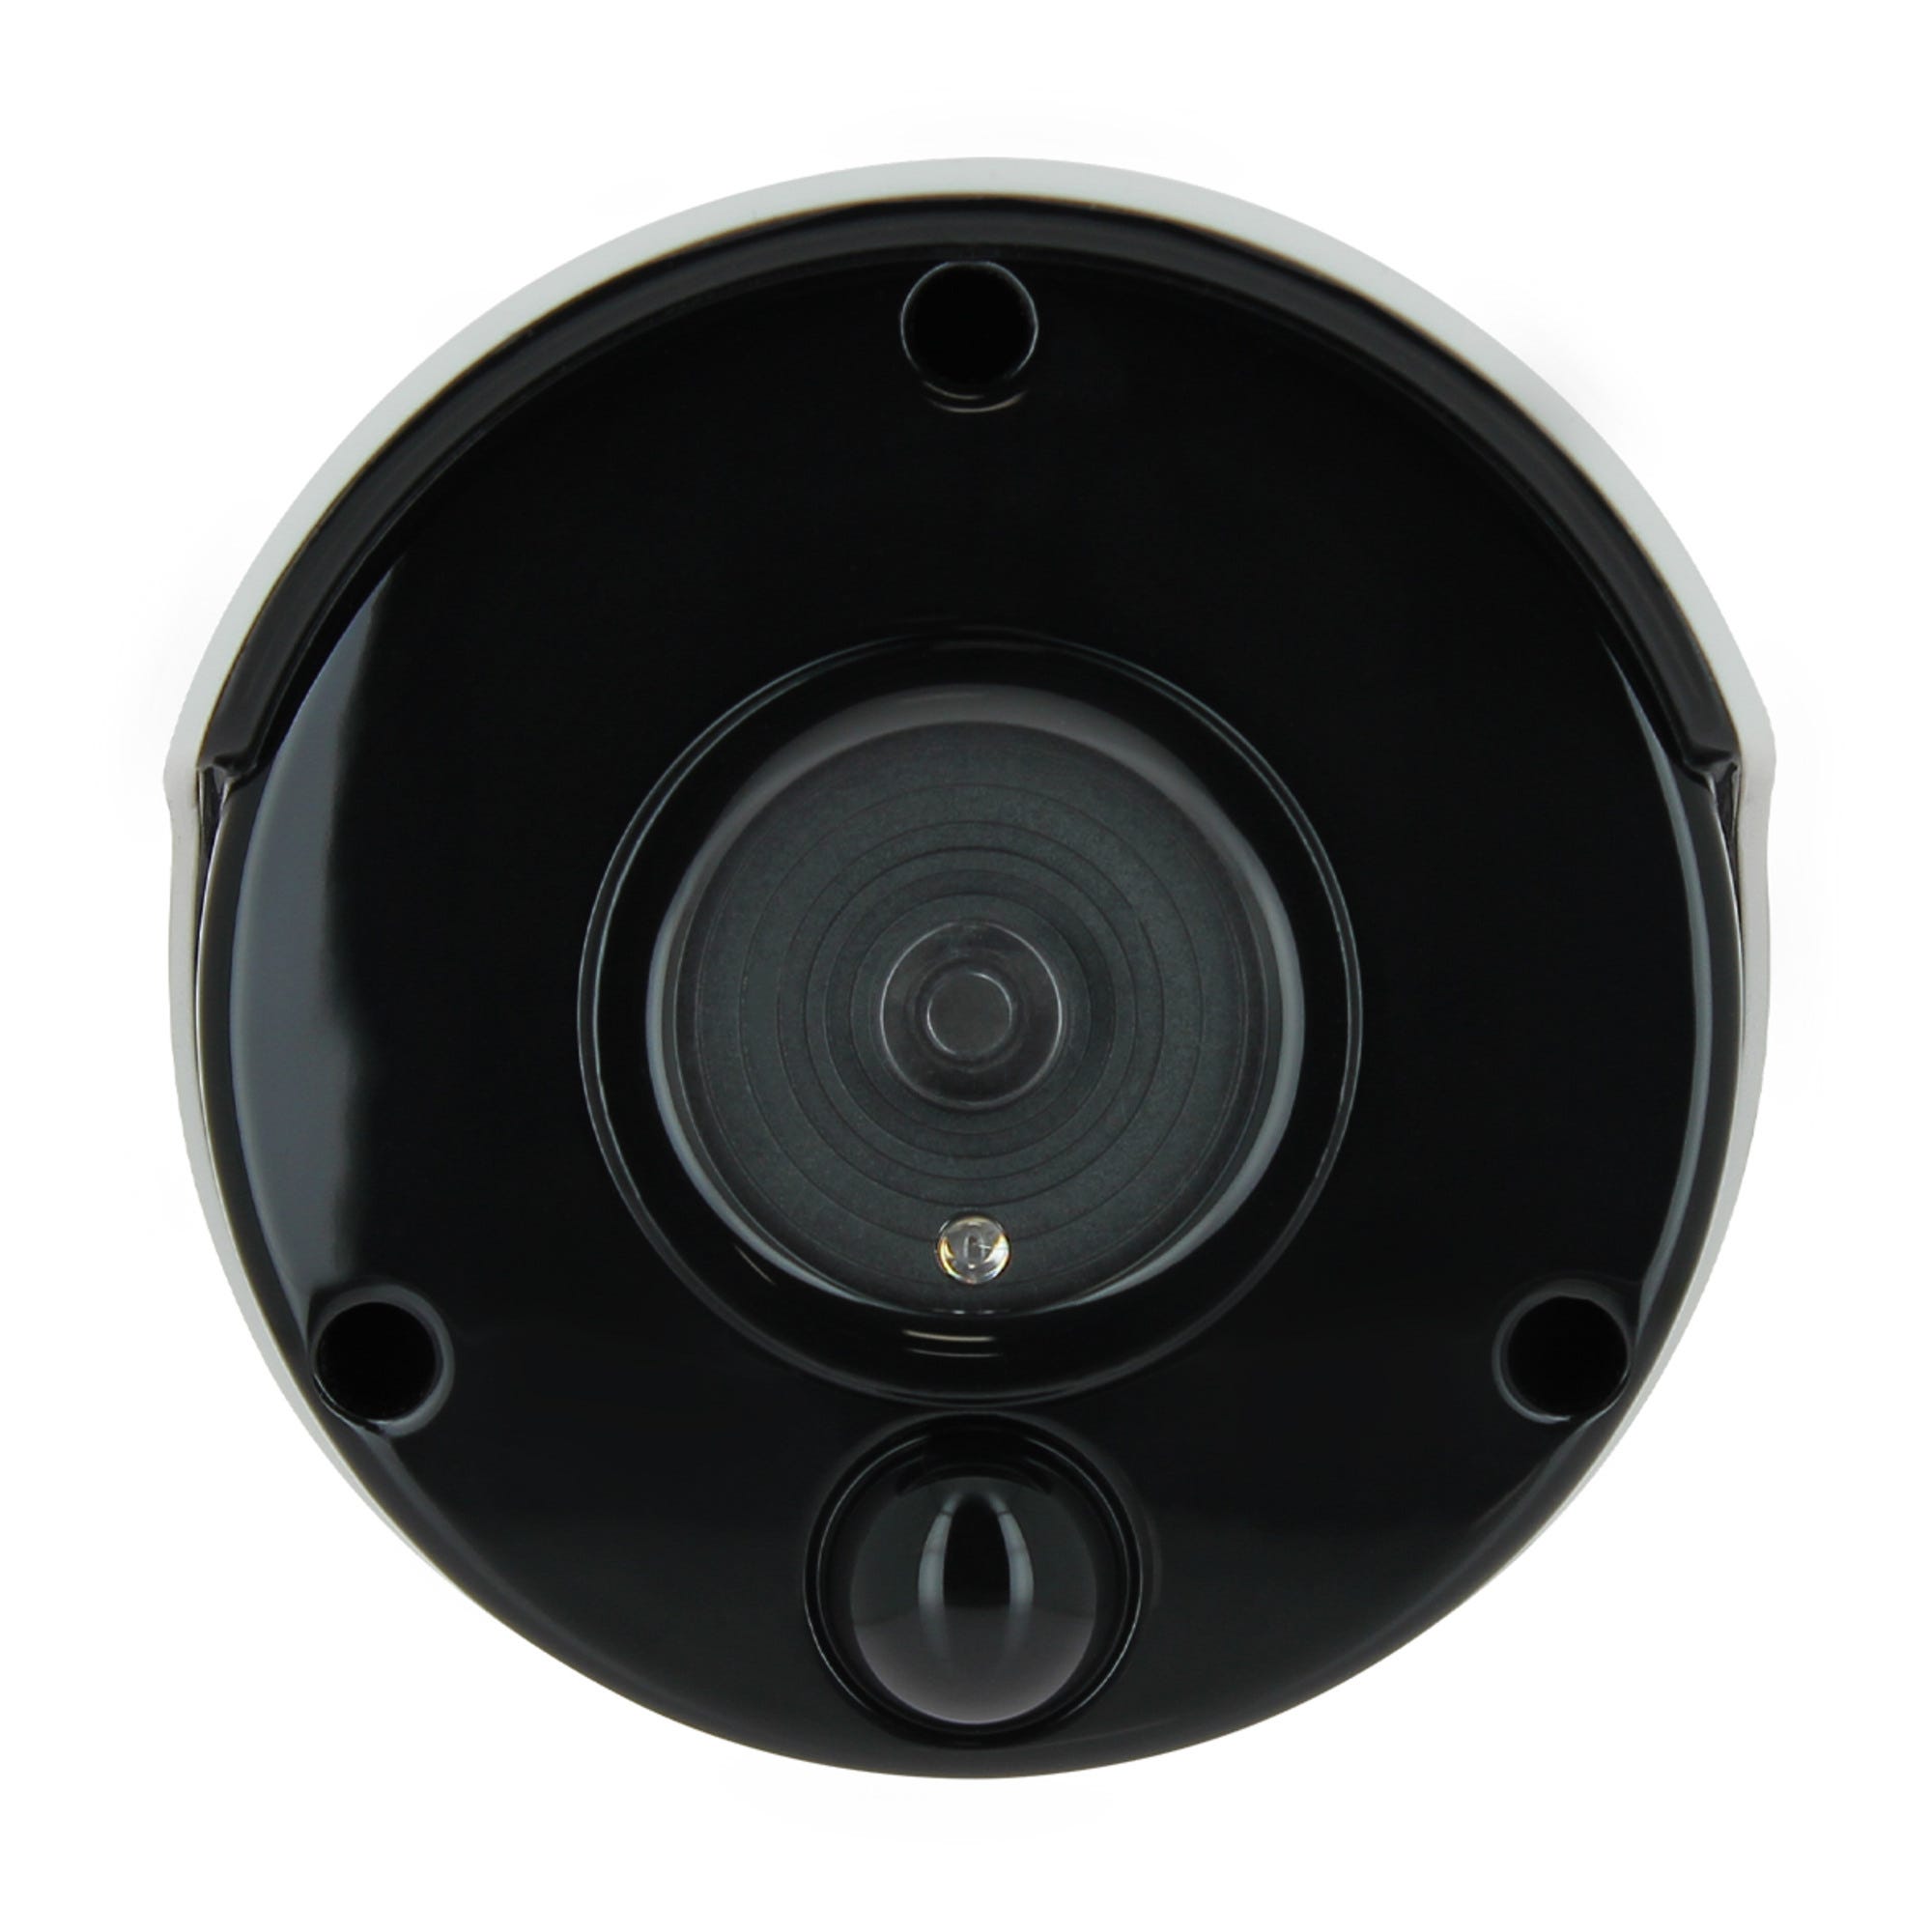 Caméra de surveillance factice type tube - SEDEA - 551180 2